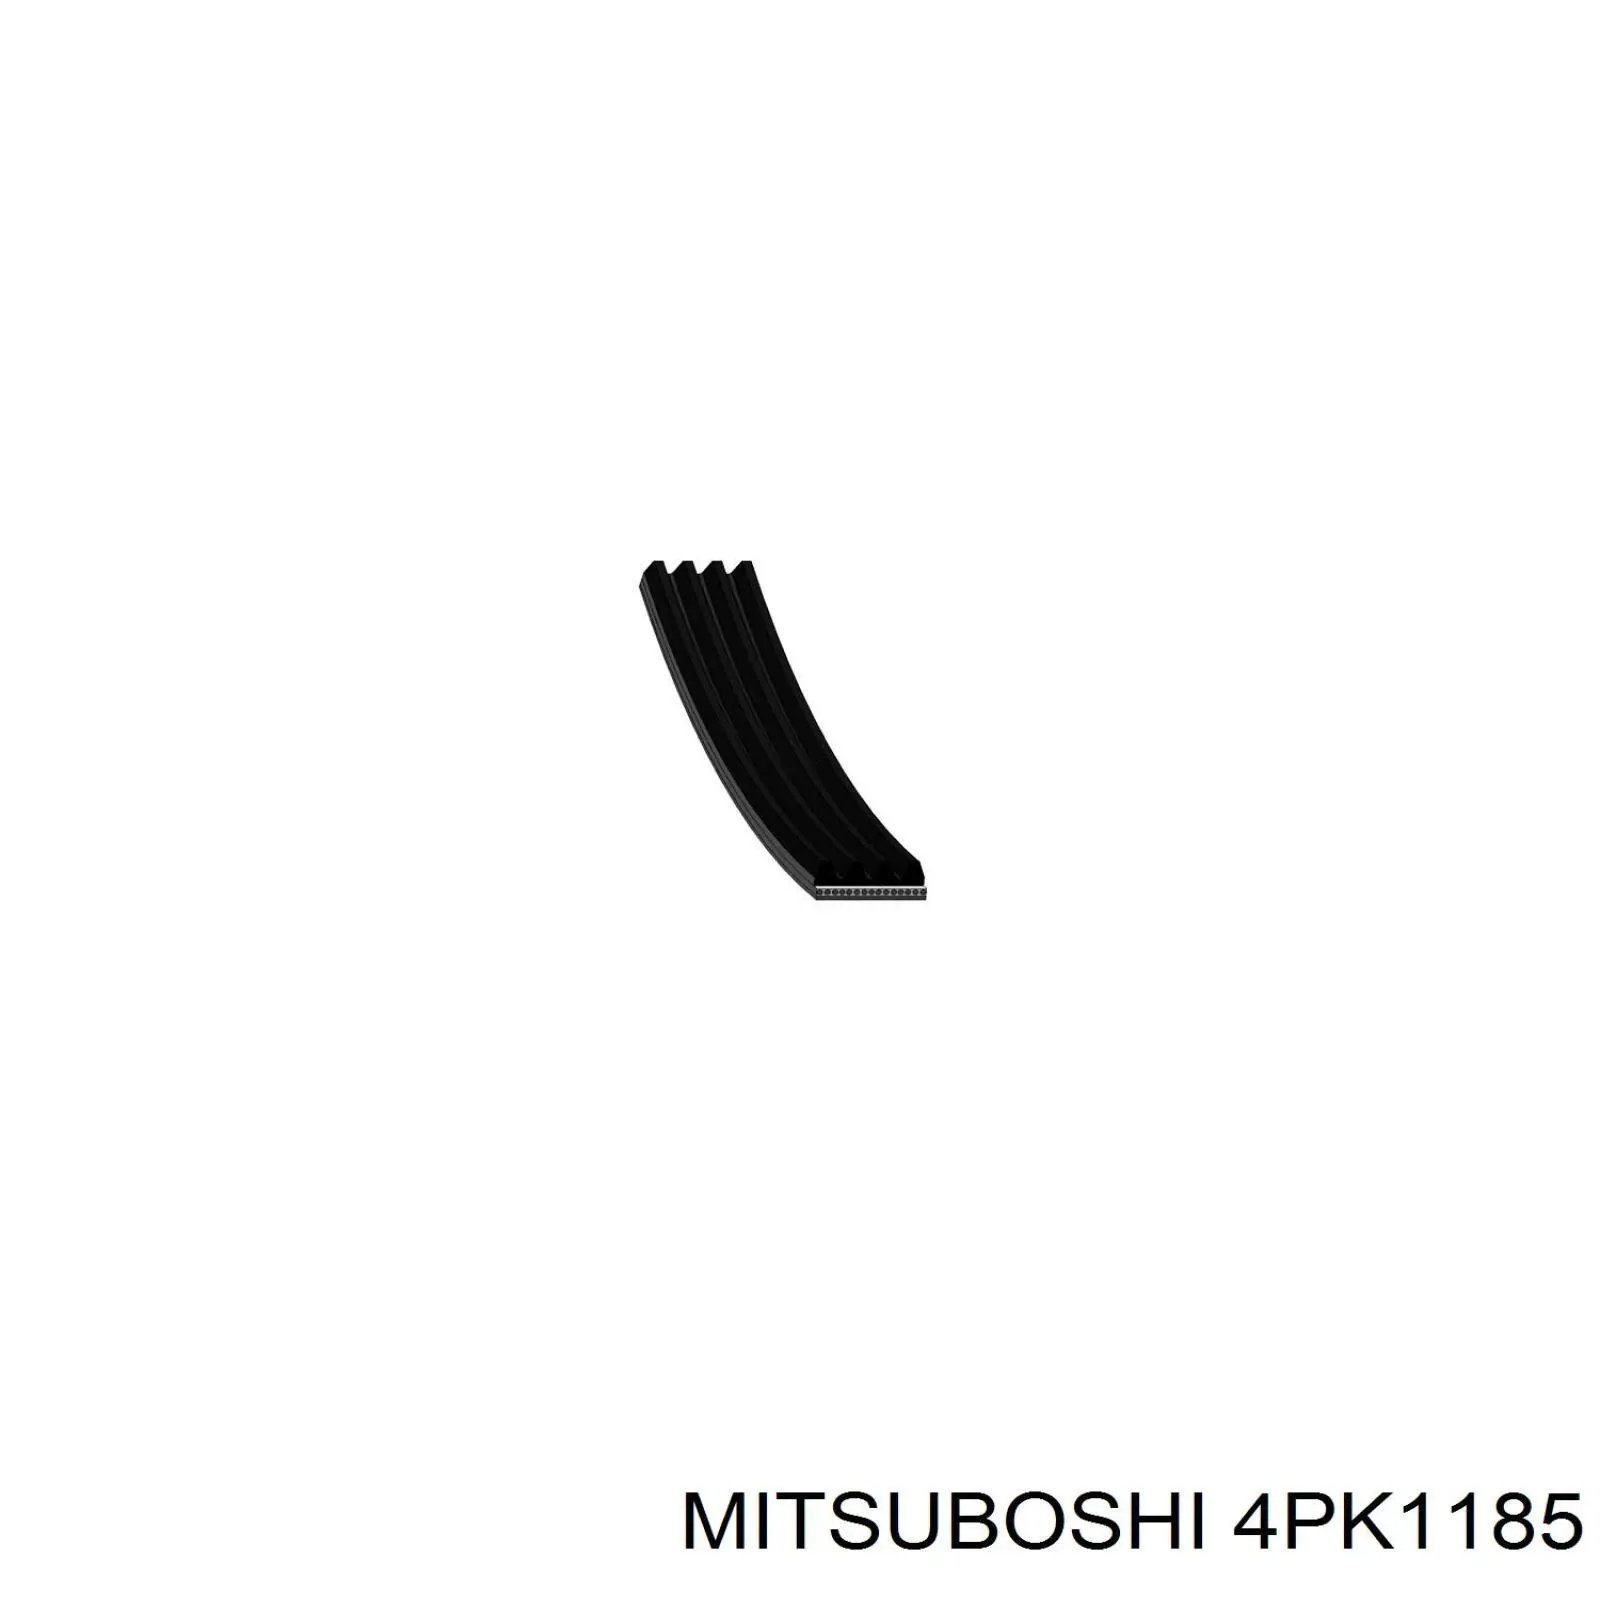 4PK1185 Mitsuboshi correa trapezoidal